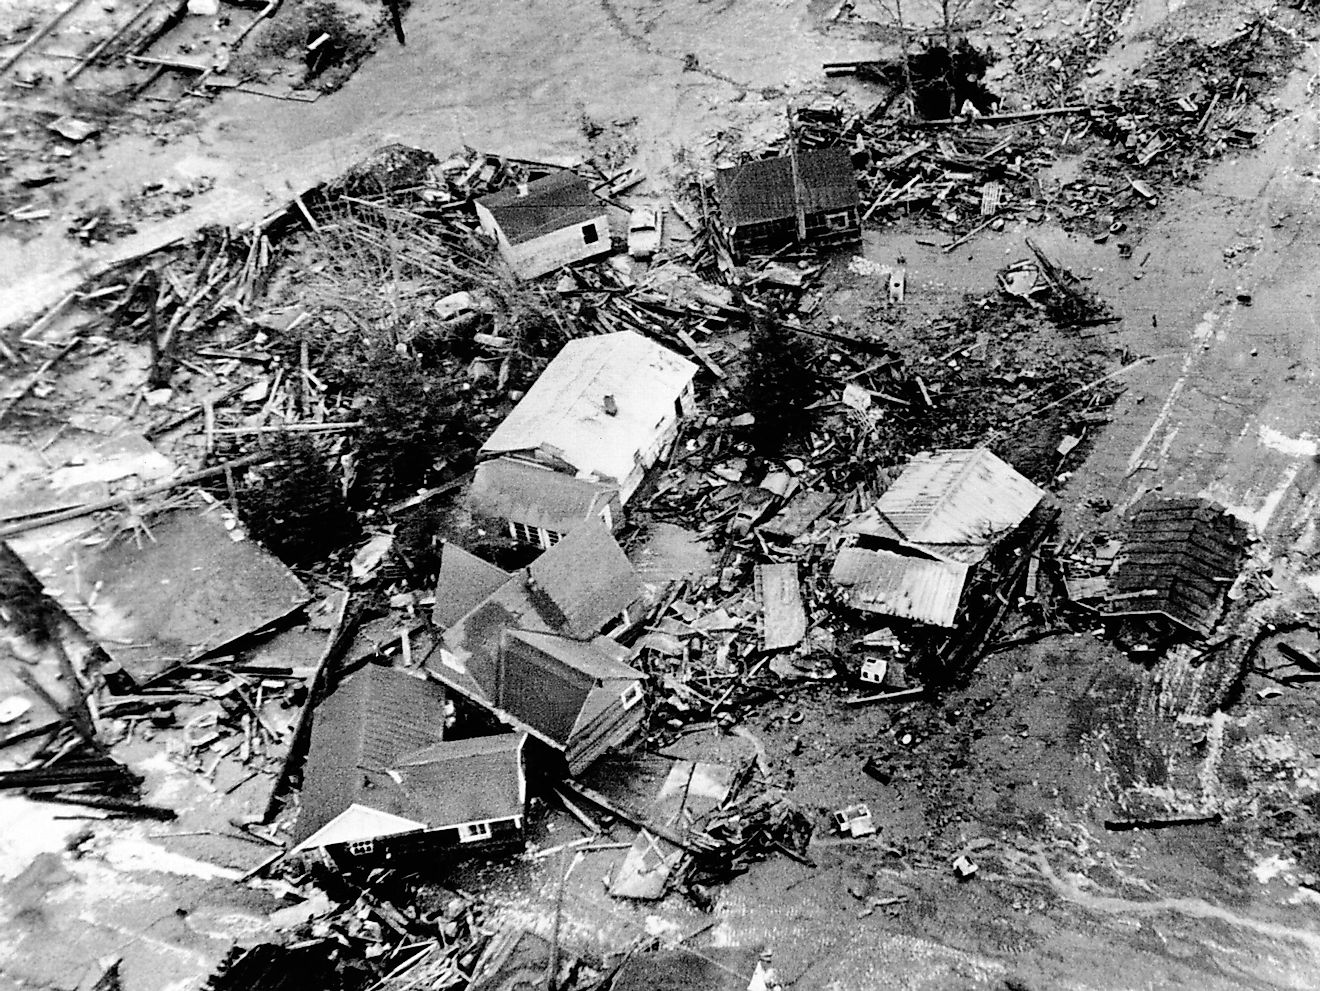 Aftermath of the 1965 Alaska earthquake. 